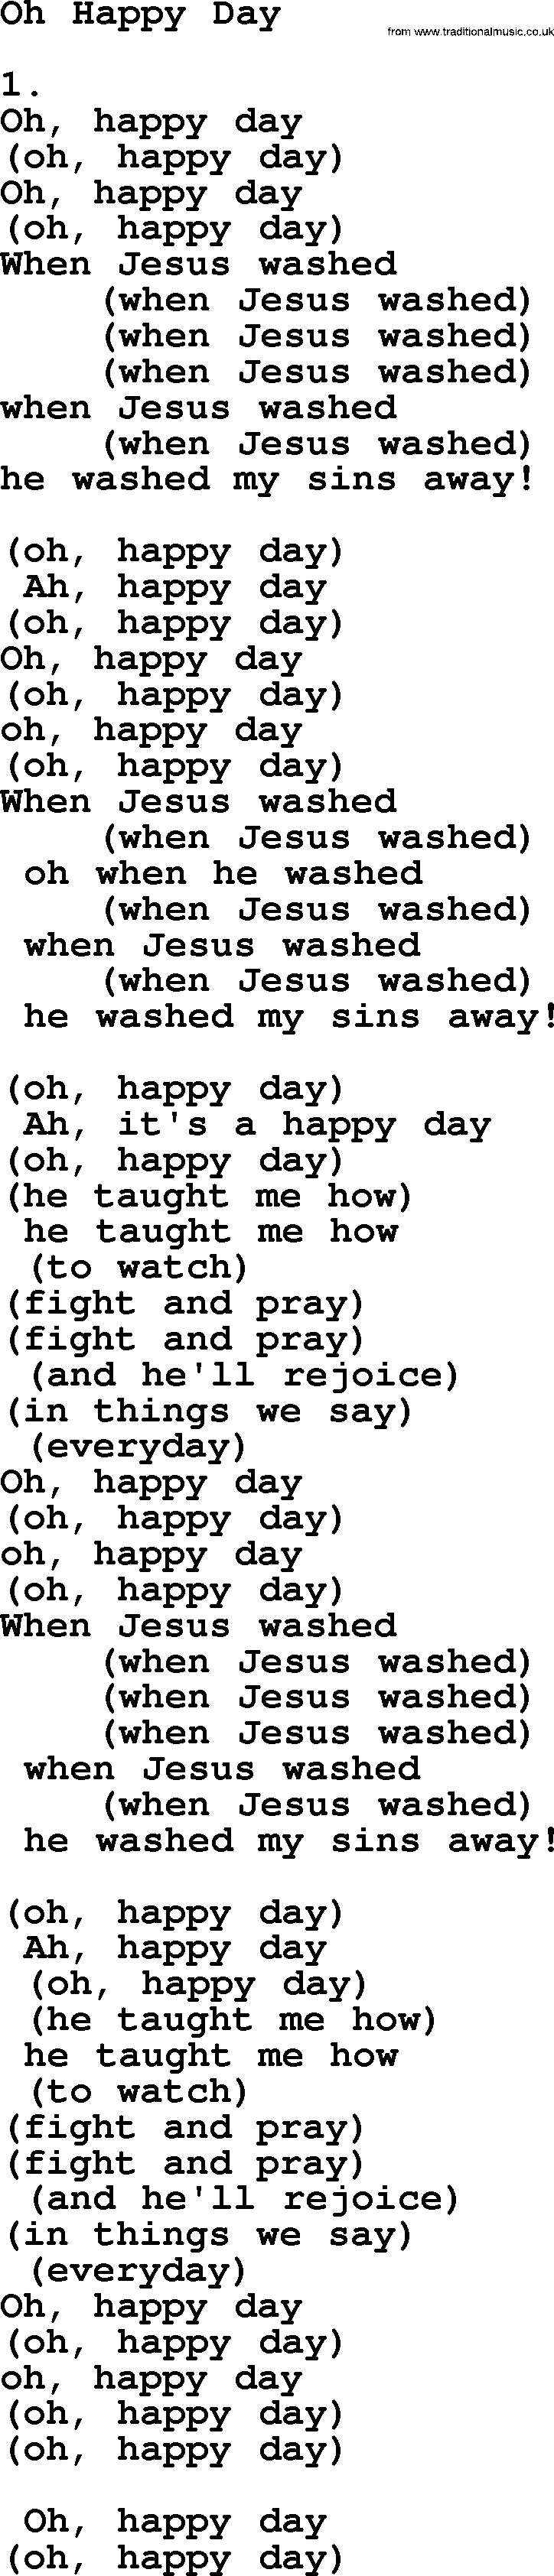 Apostolic & Pentecostal Hymns and Songs, Hymn: Oh Happy Day lyrics and PDF